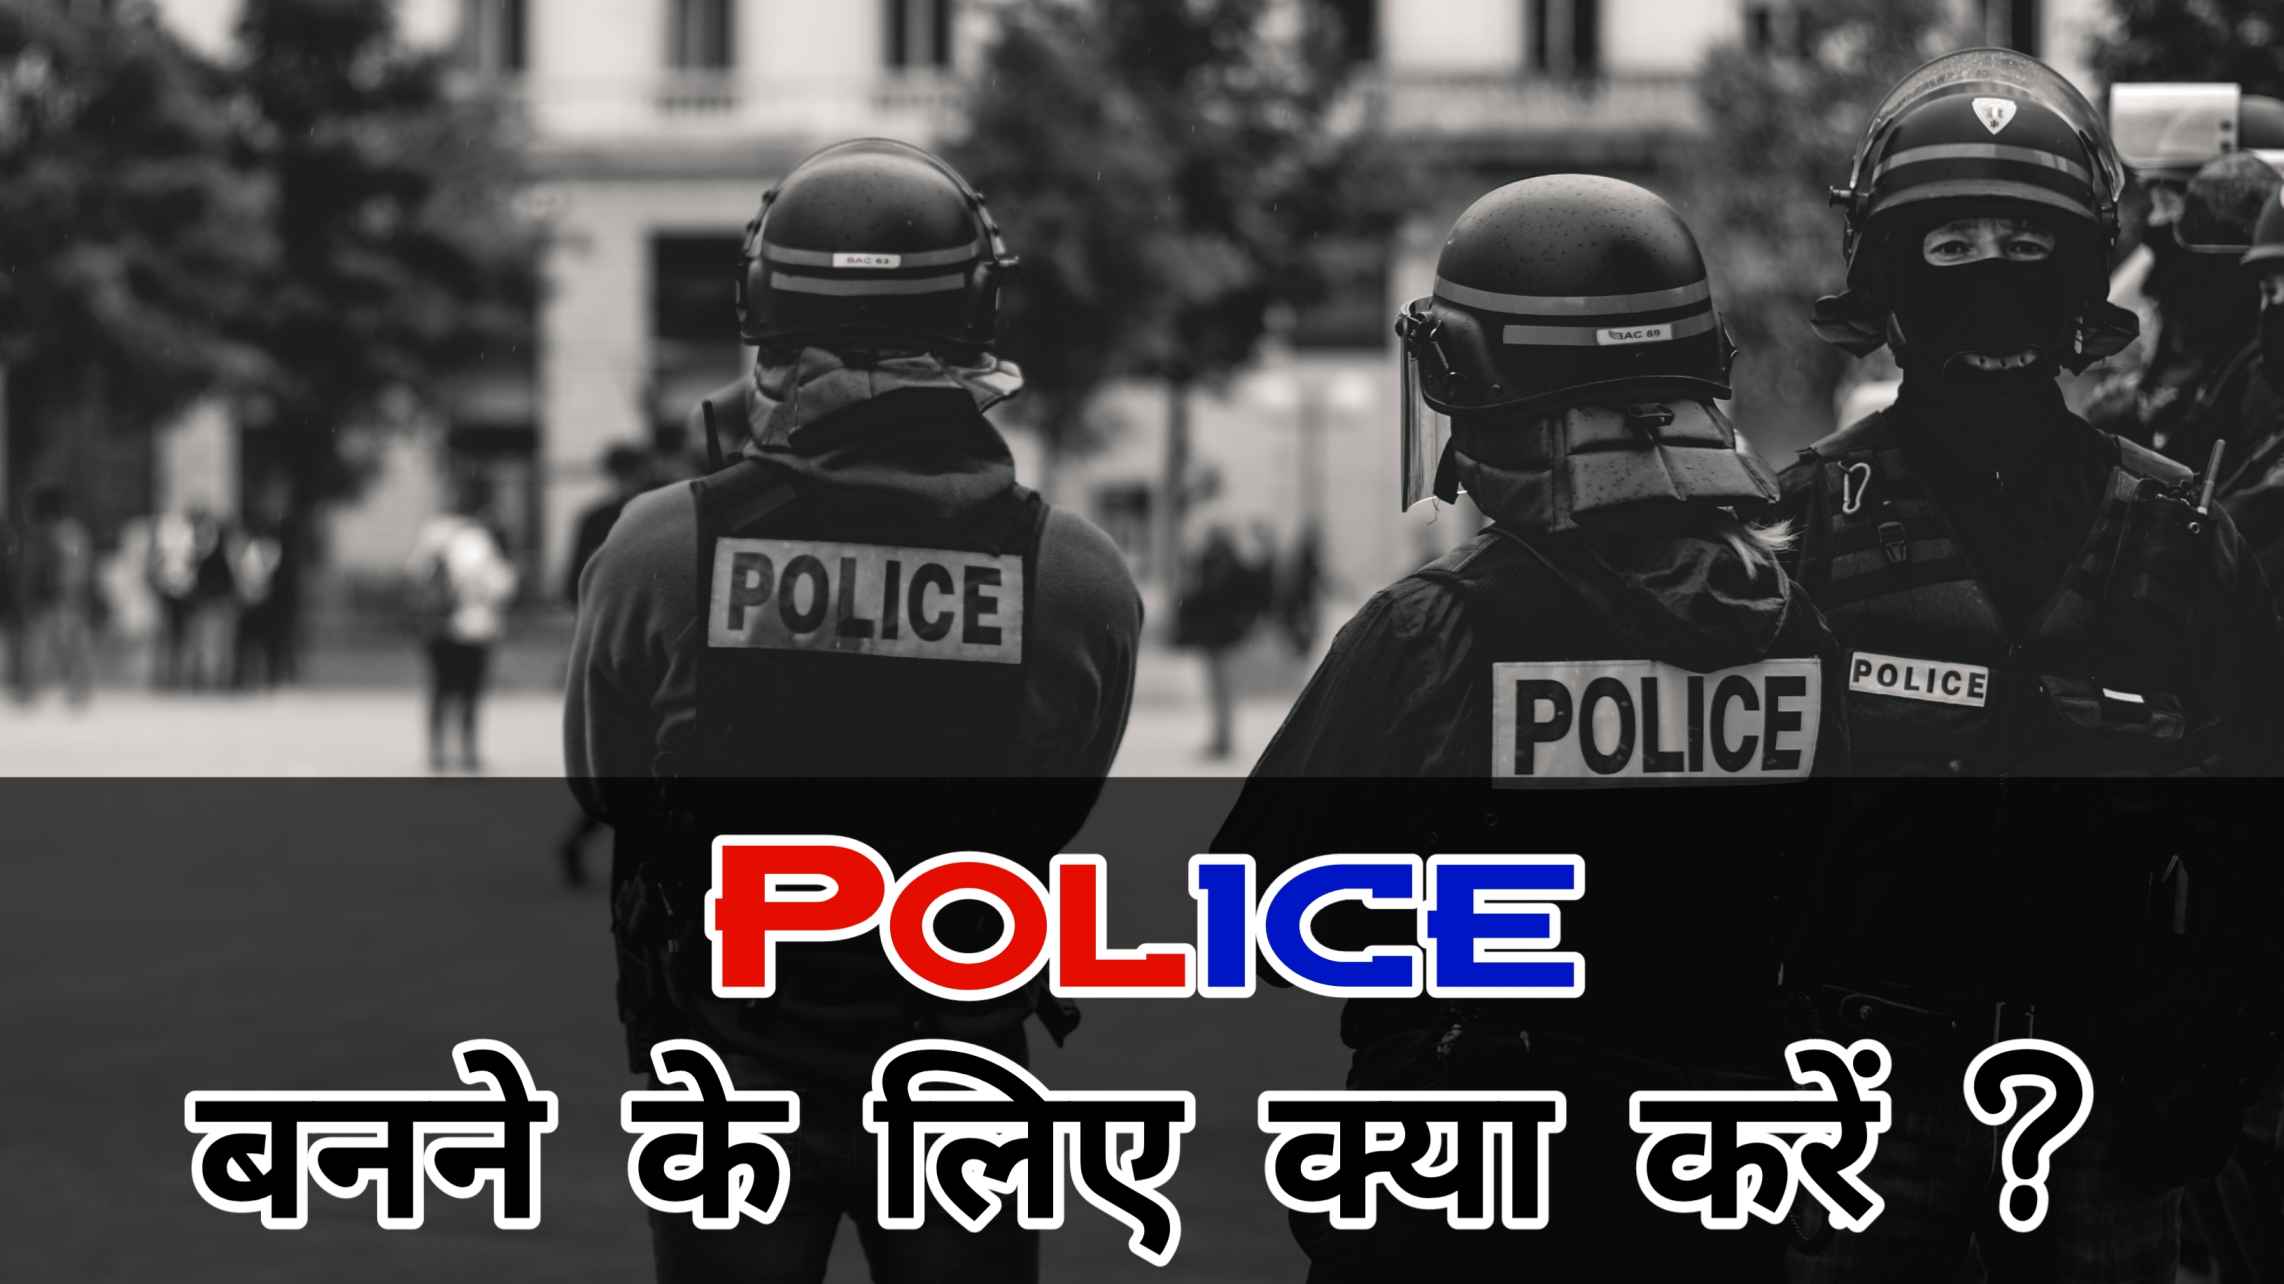 Police banne ke liye kya kare : पुलिस की तैयारी कैसे करें ?